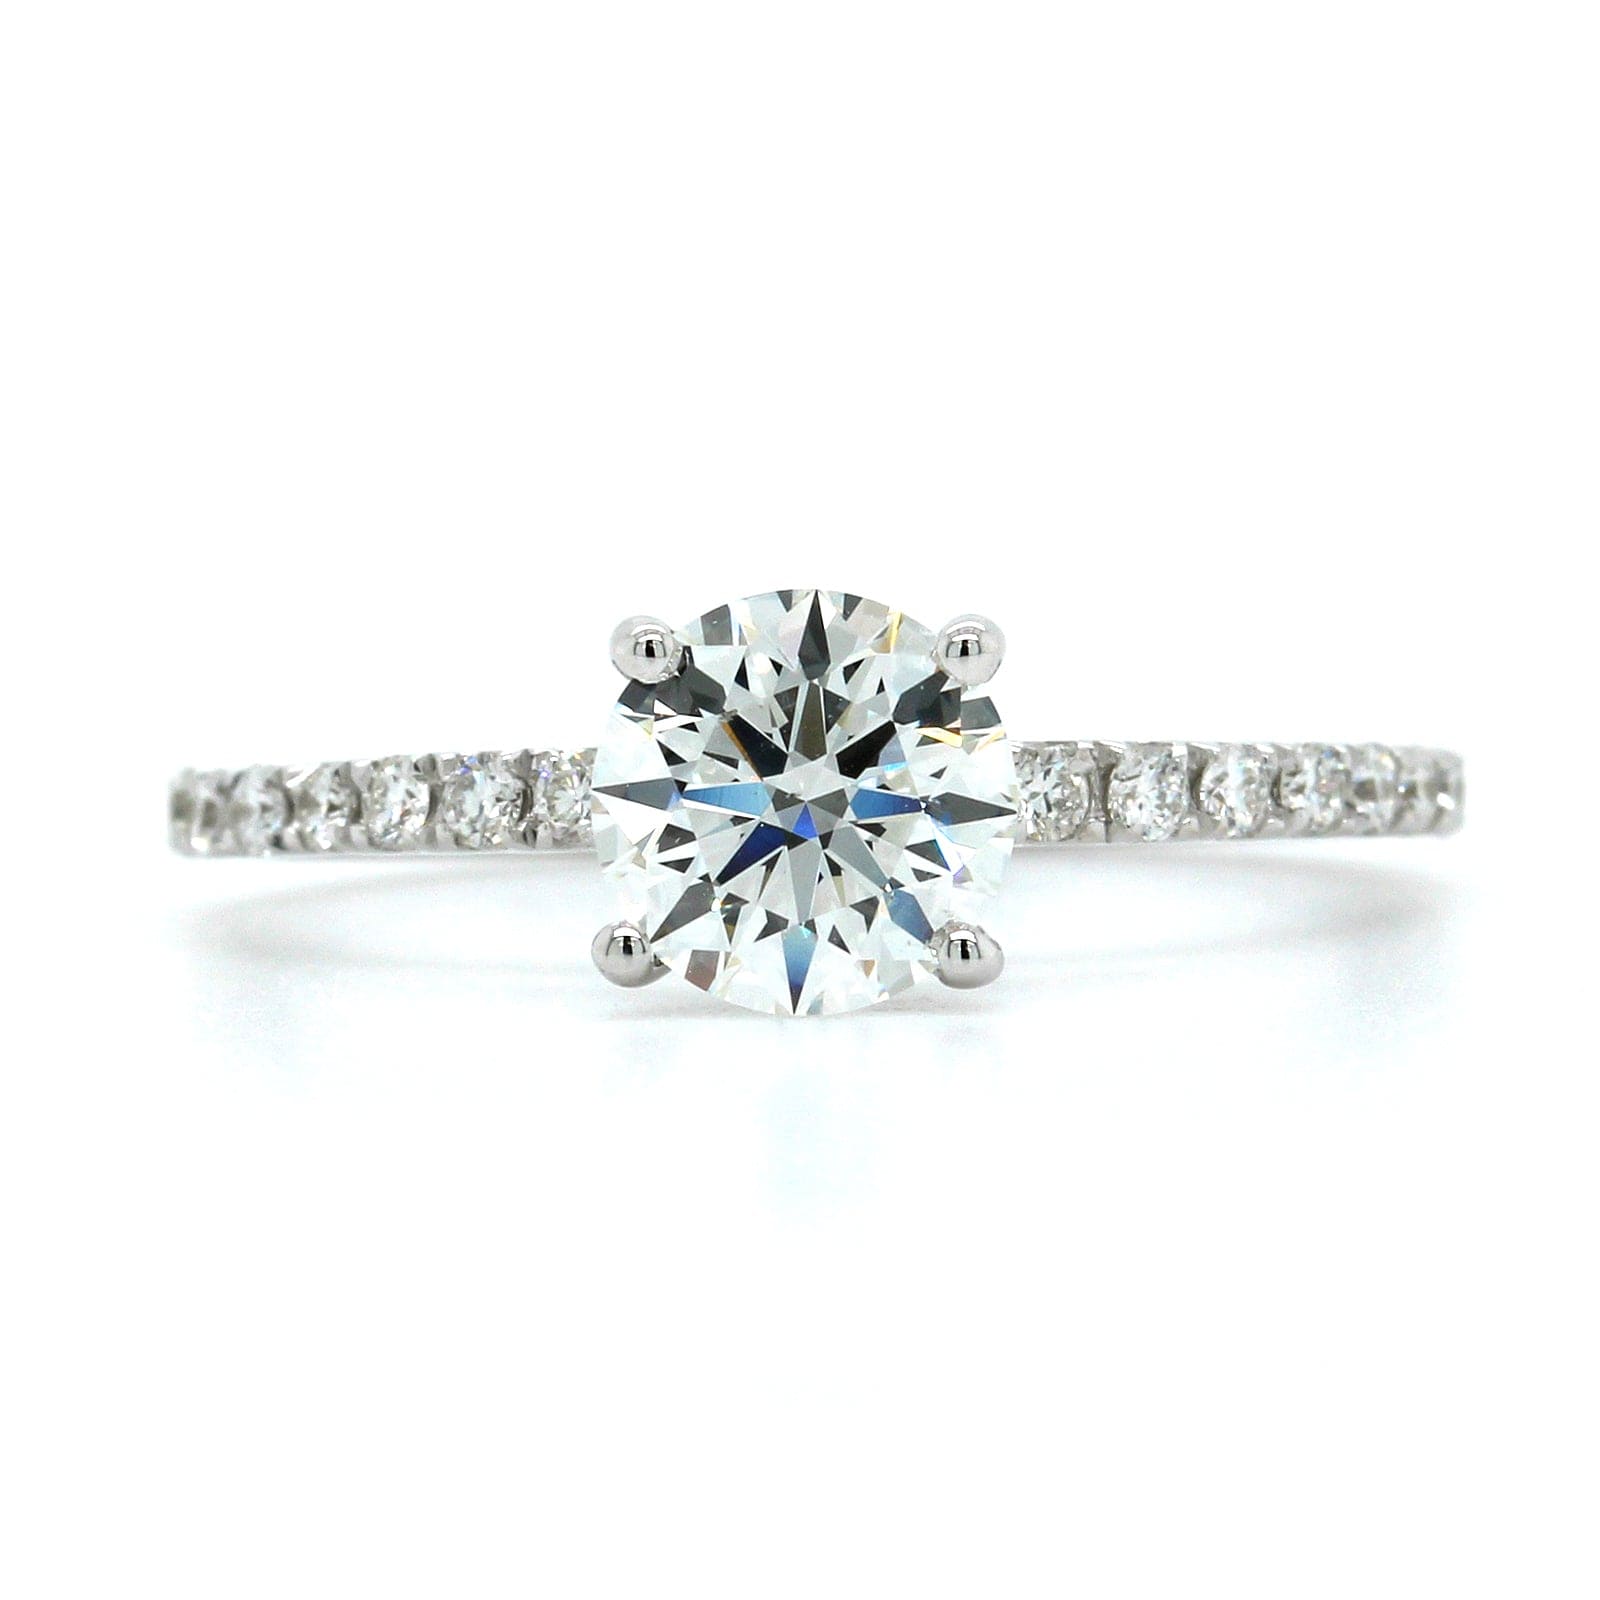 Explore diamond rings in all styles